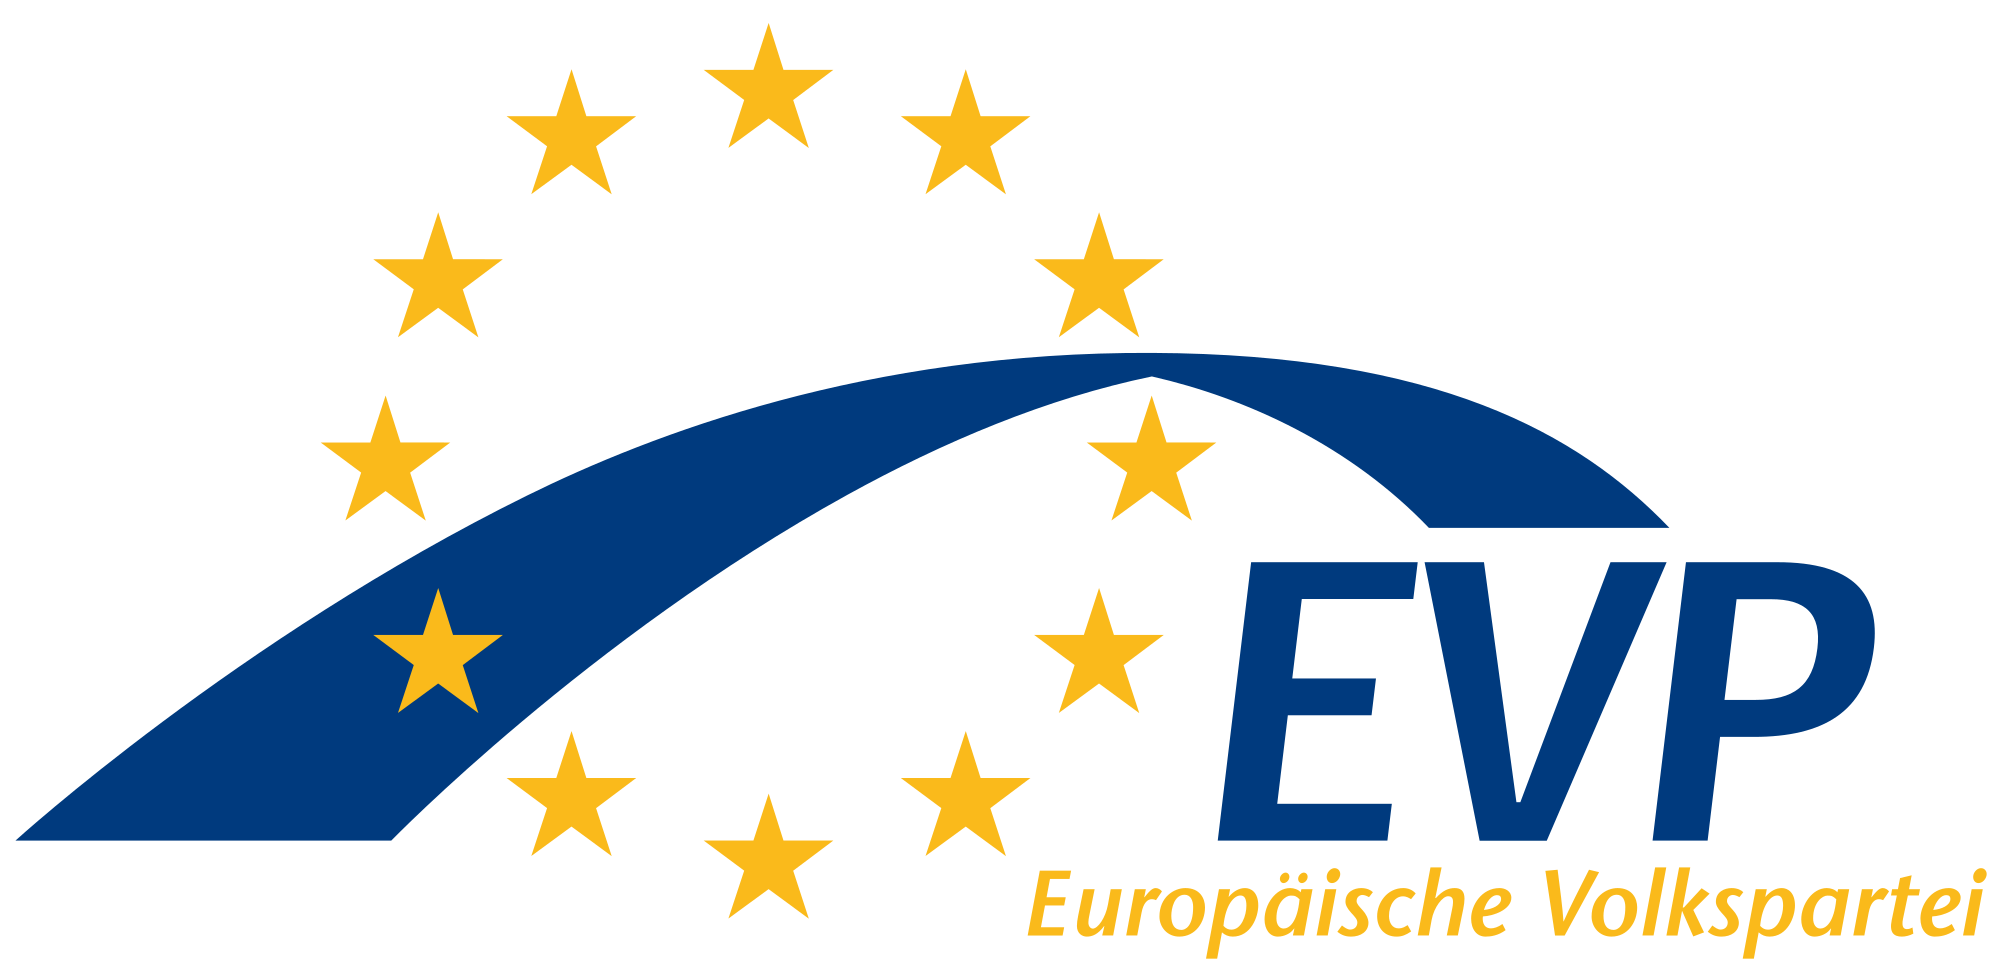 European Peoples Party европейская народная партия европейская народная партия